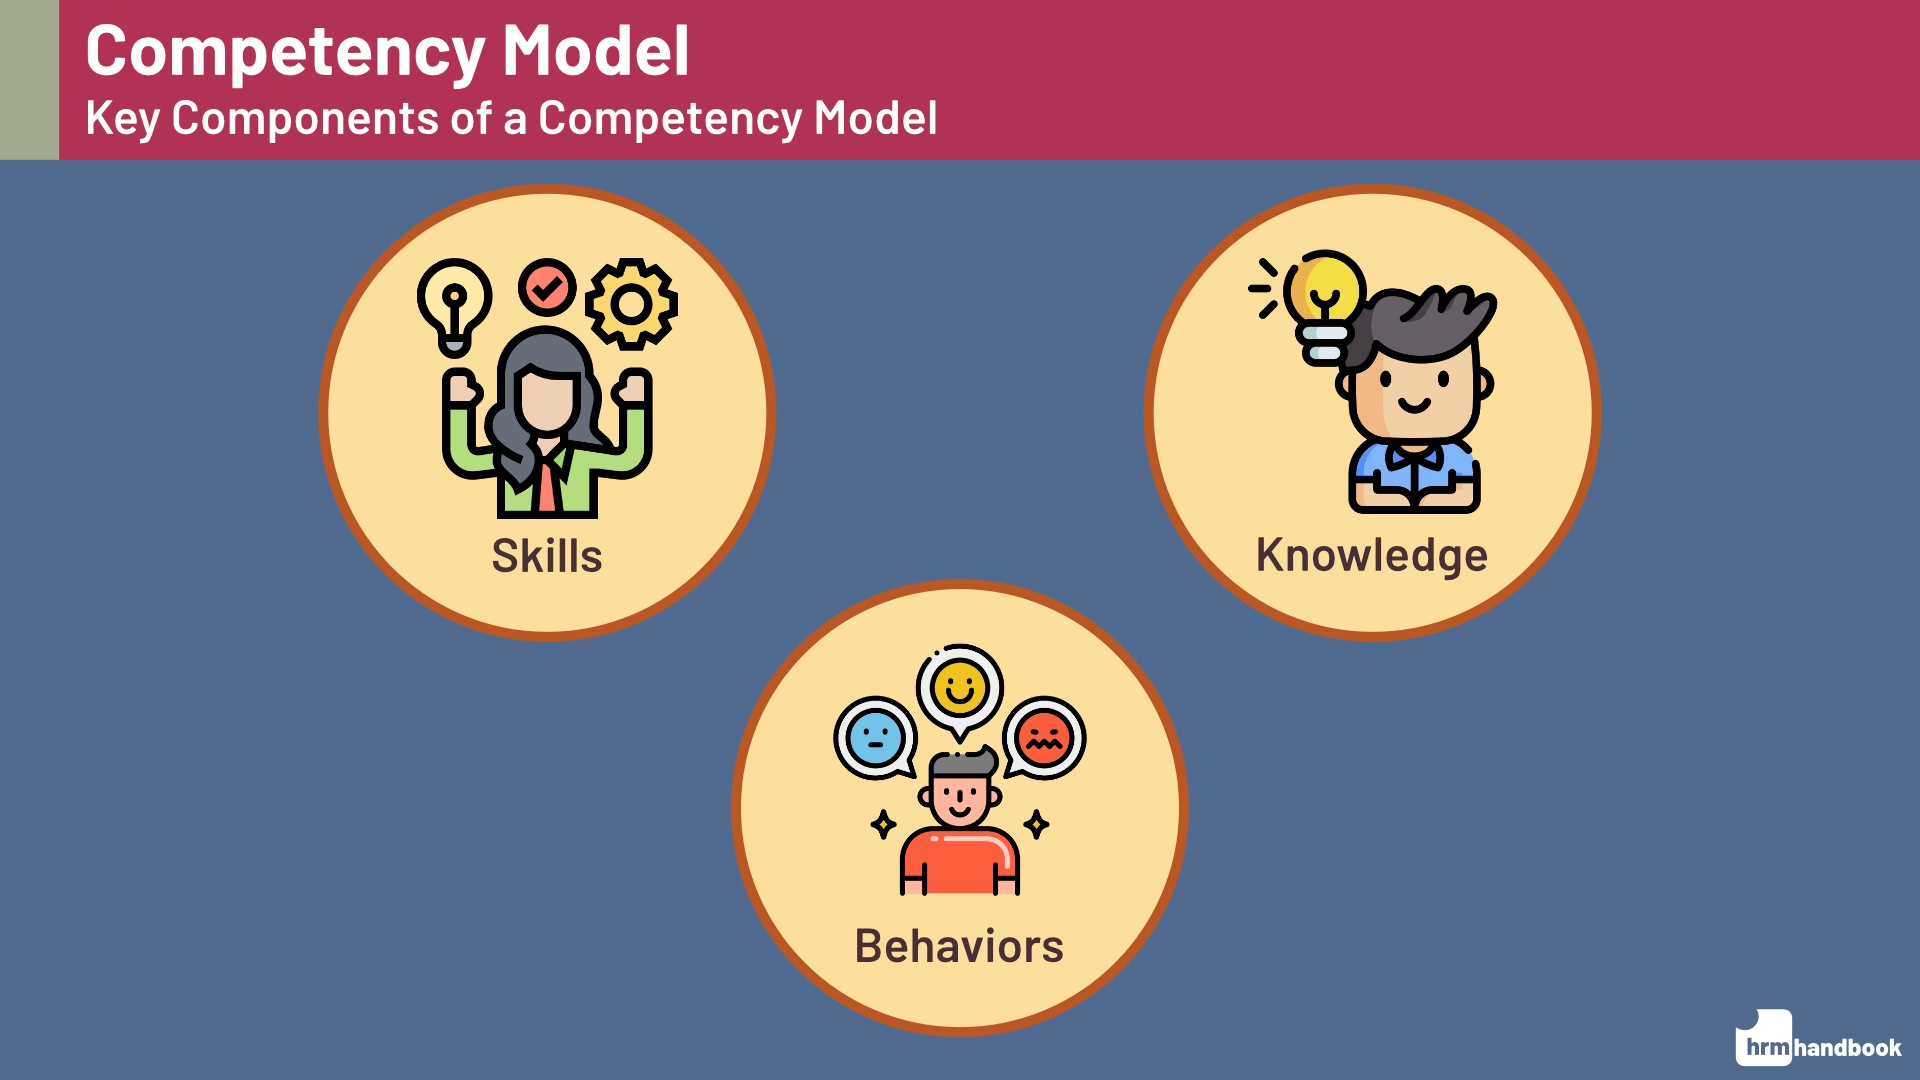 Competency Model: Key Components - Skills, Behaviors, Knowledge